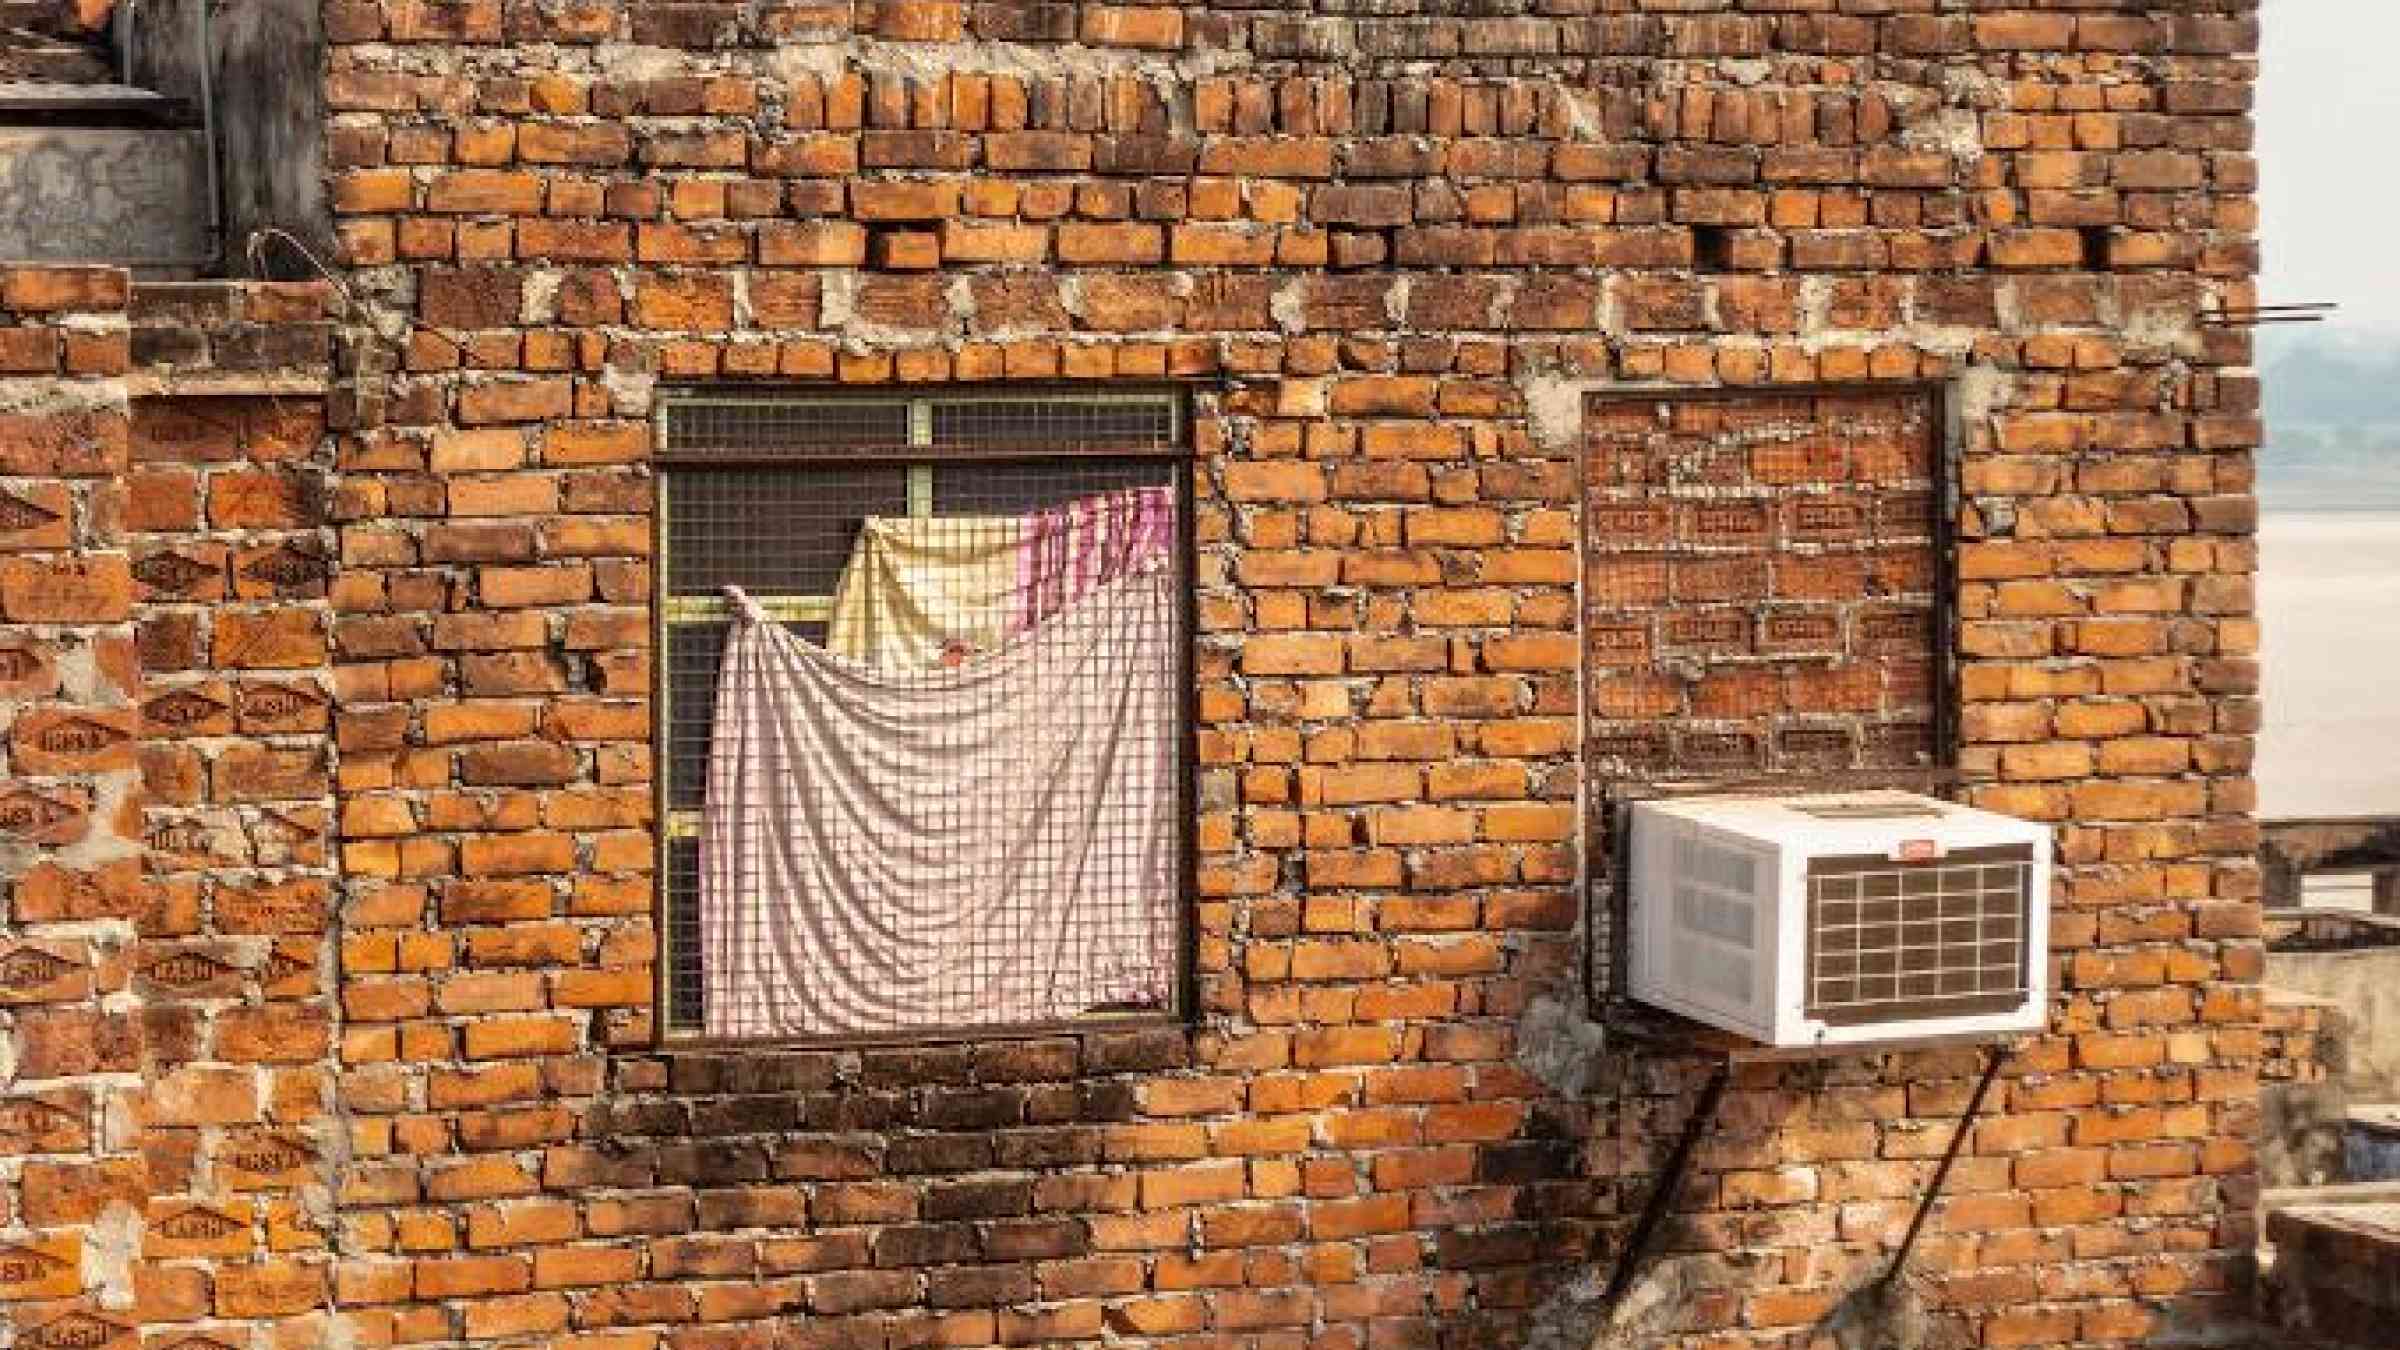 Varanasi, Uttar Pradesh, India: Bare, brown brick walls of a house with a mesh window and an air conditioner. balajisrinivasan/Shutterstock